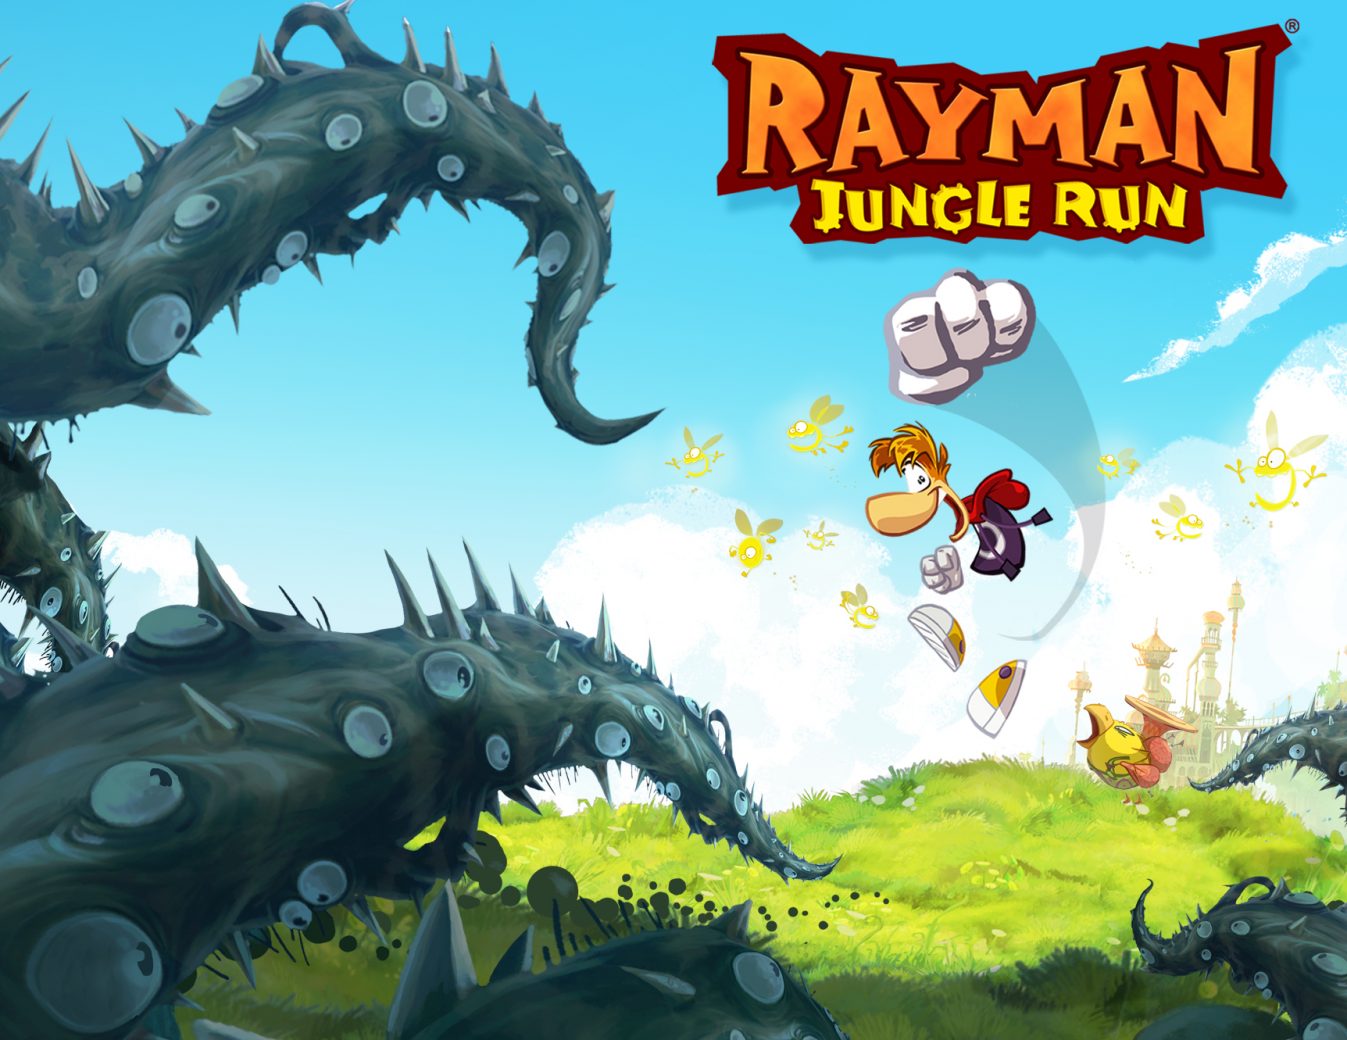 Rayman Jungle Run (iOS/Android)